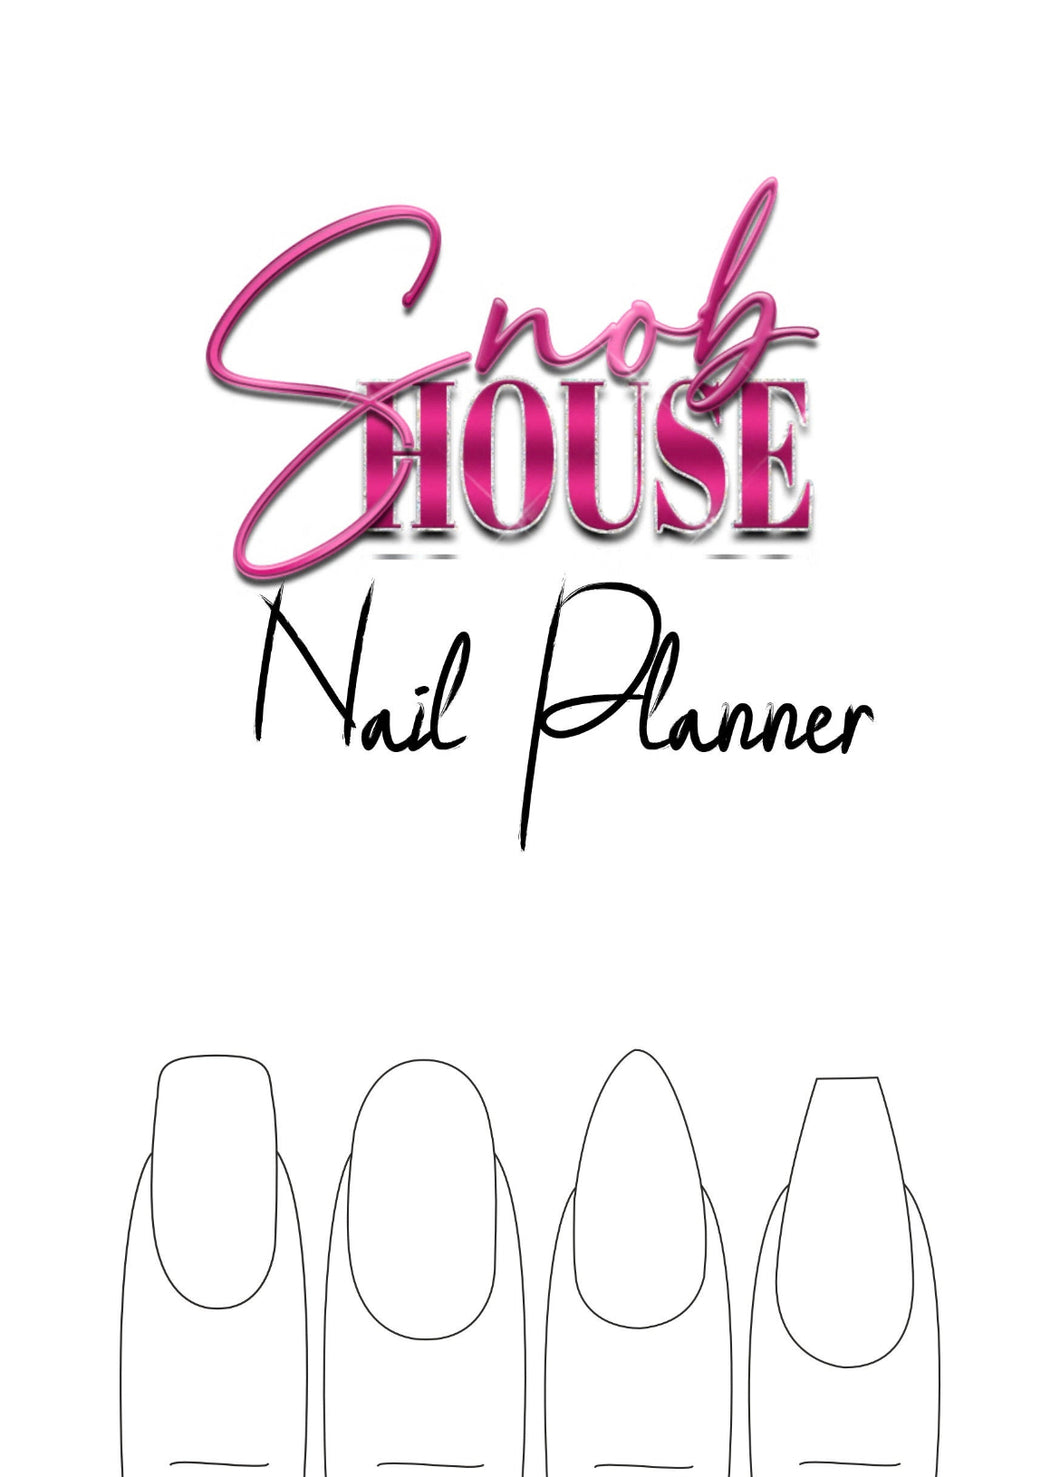 Nail art planner/recipe book